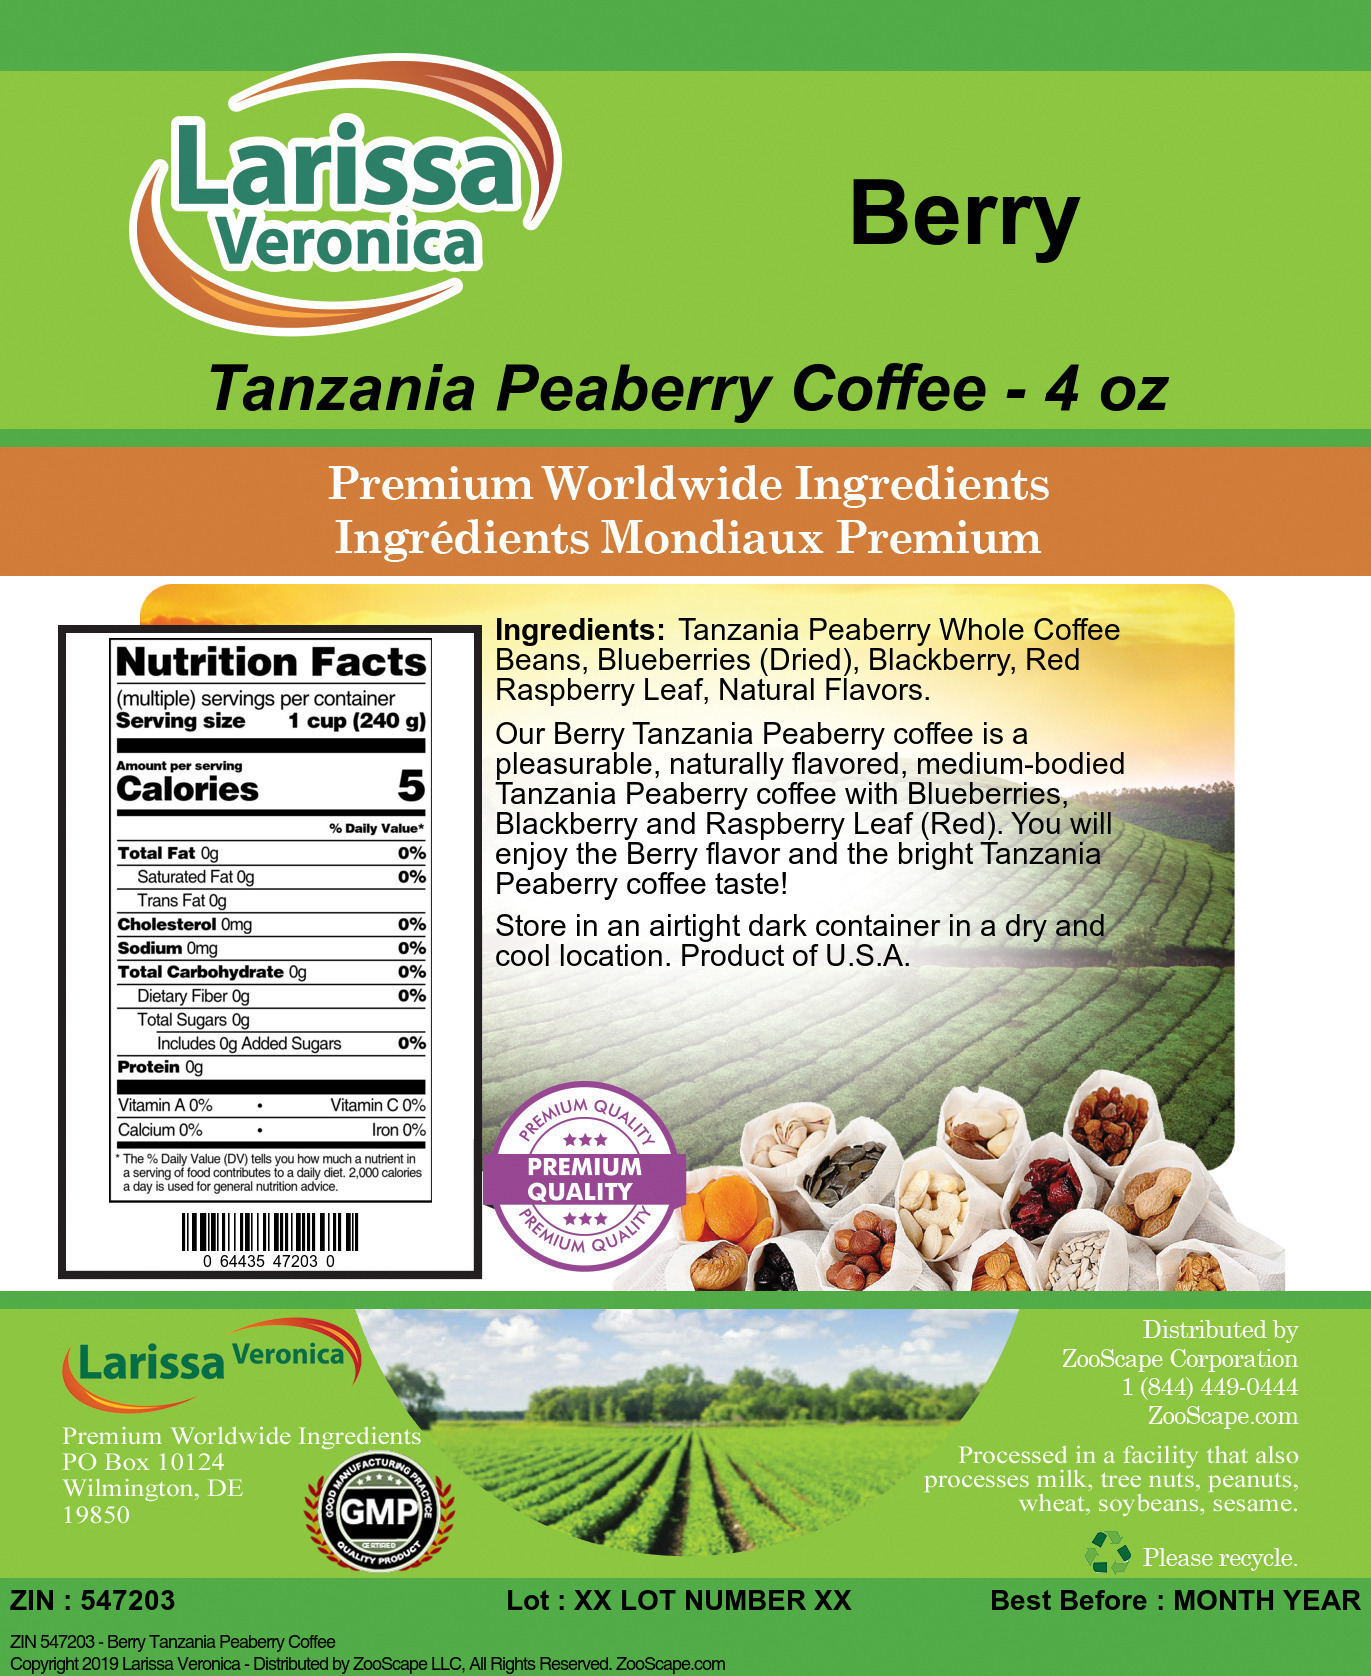 Berry Tanzania Peaberry Coffee - Label